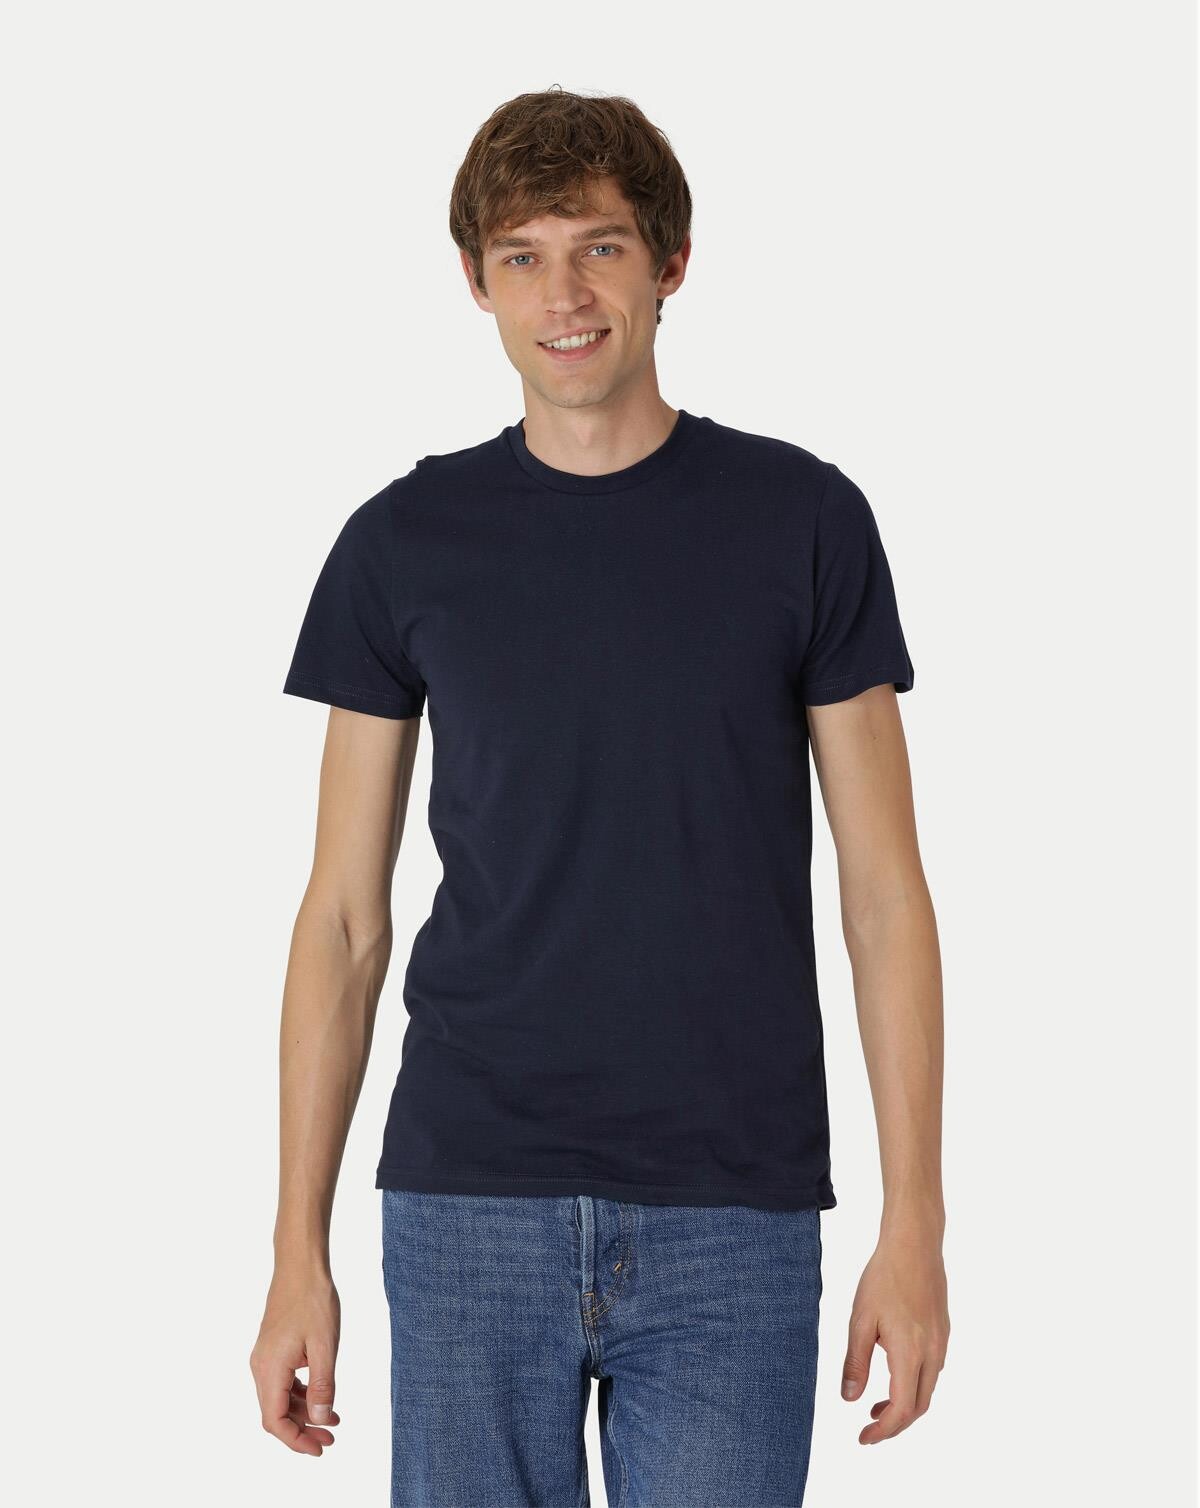 Neutral Økologisk T-shirt til - Tætsiddende (Navy, XL)